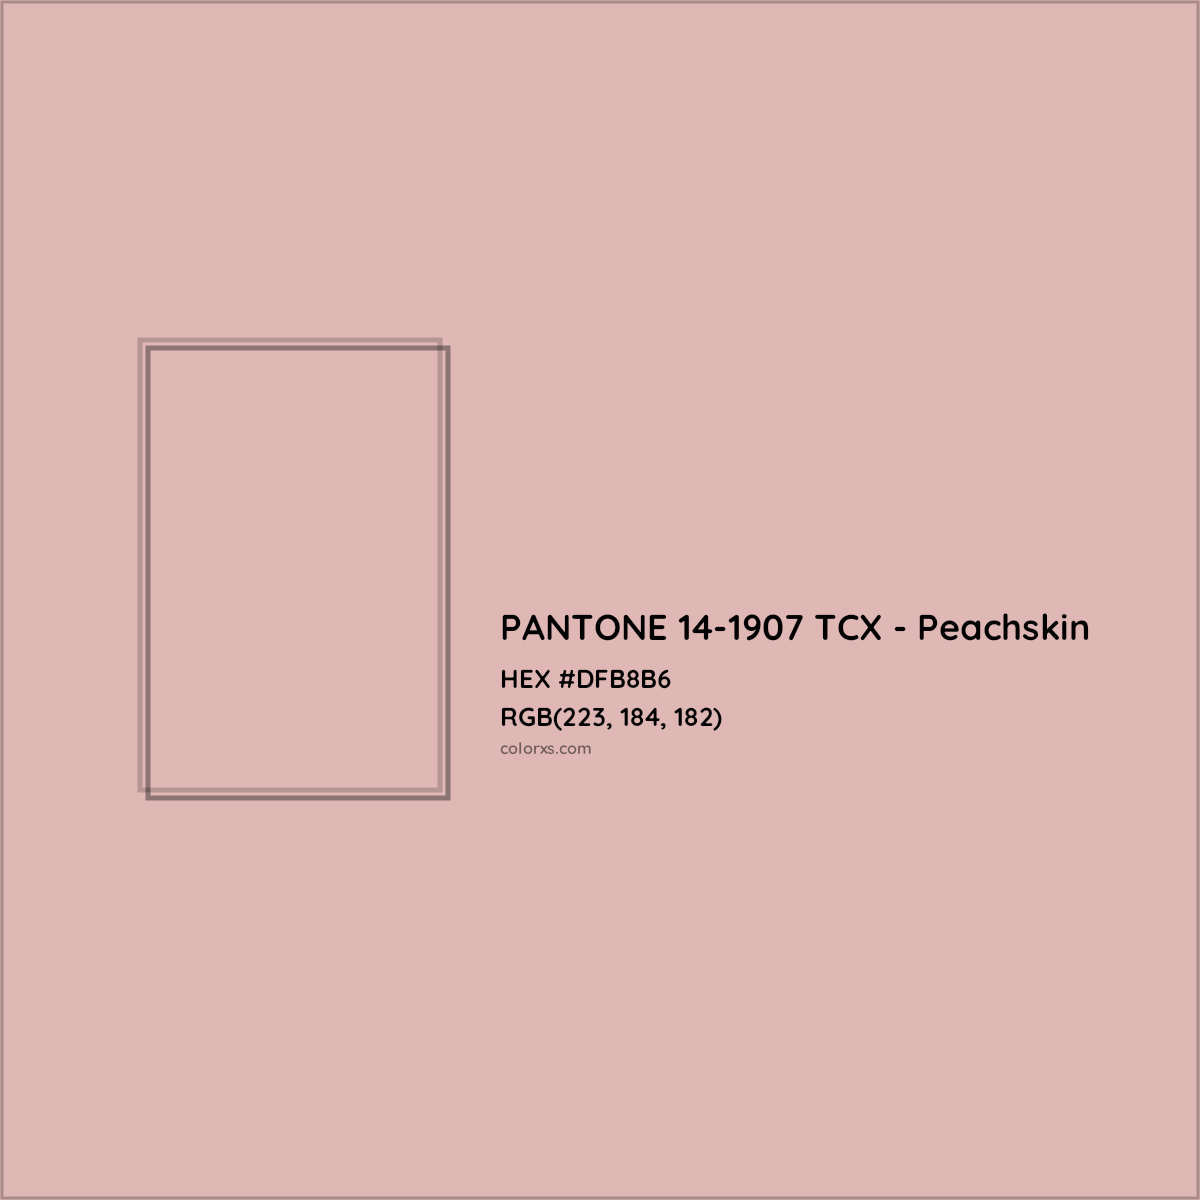 HEX #DFB8B6 PANTONE 14-1907 TCX - Peachskin CMS Pantone TCX - Color Code